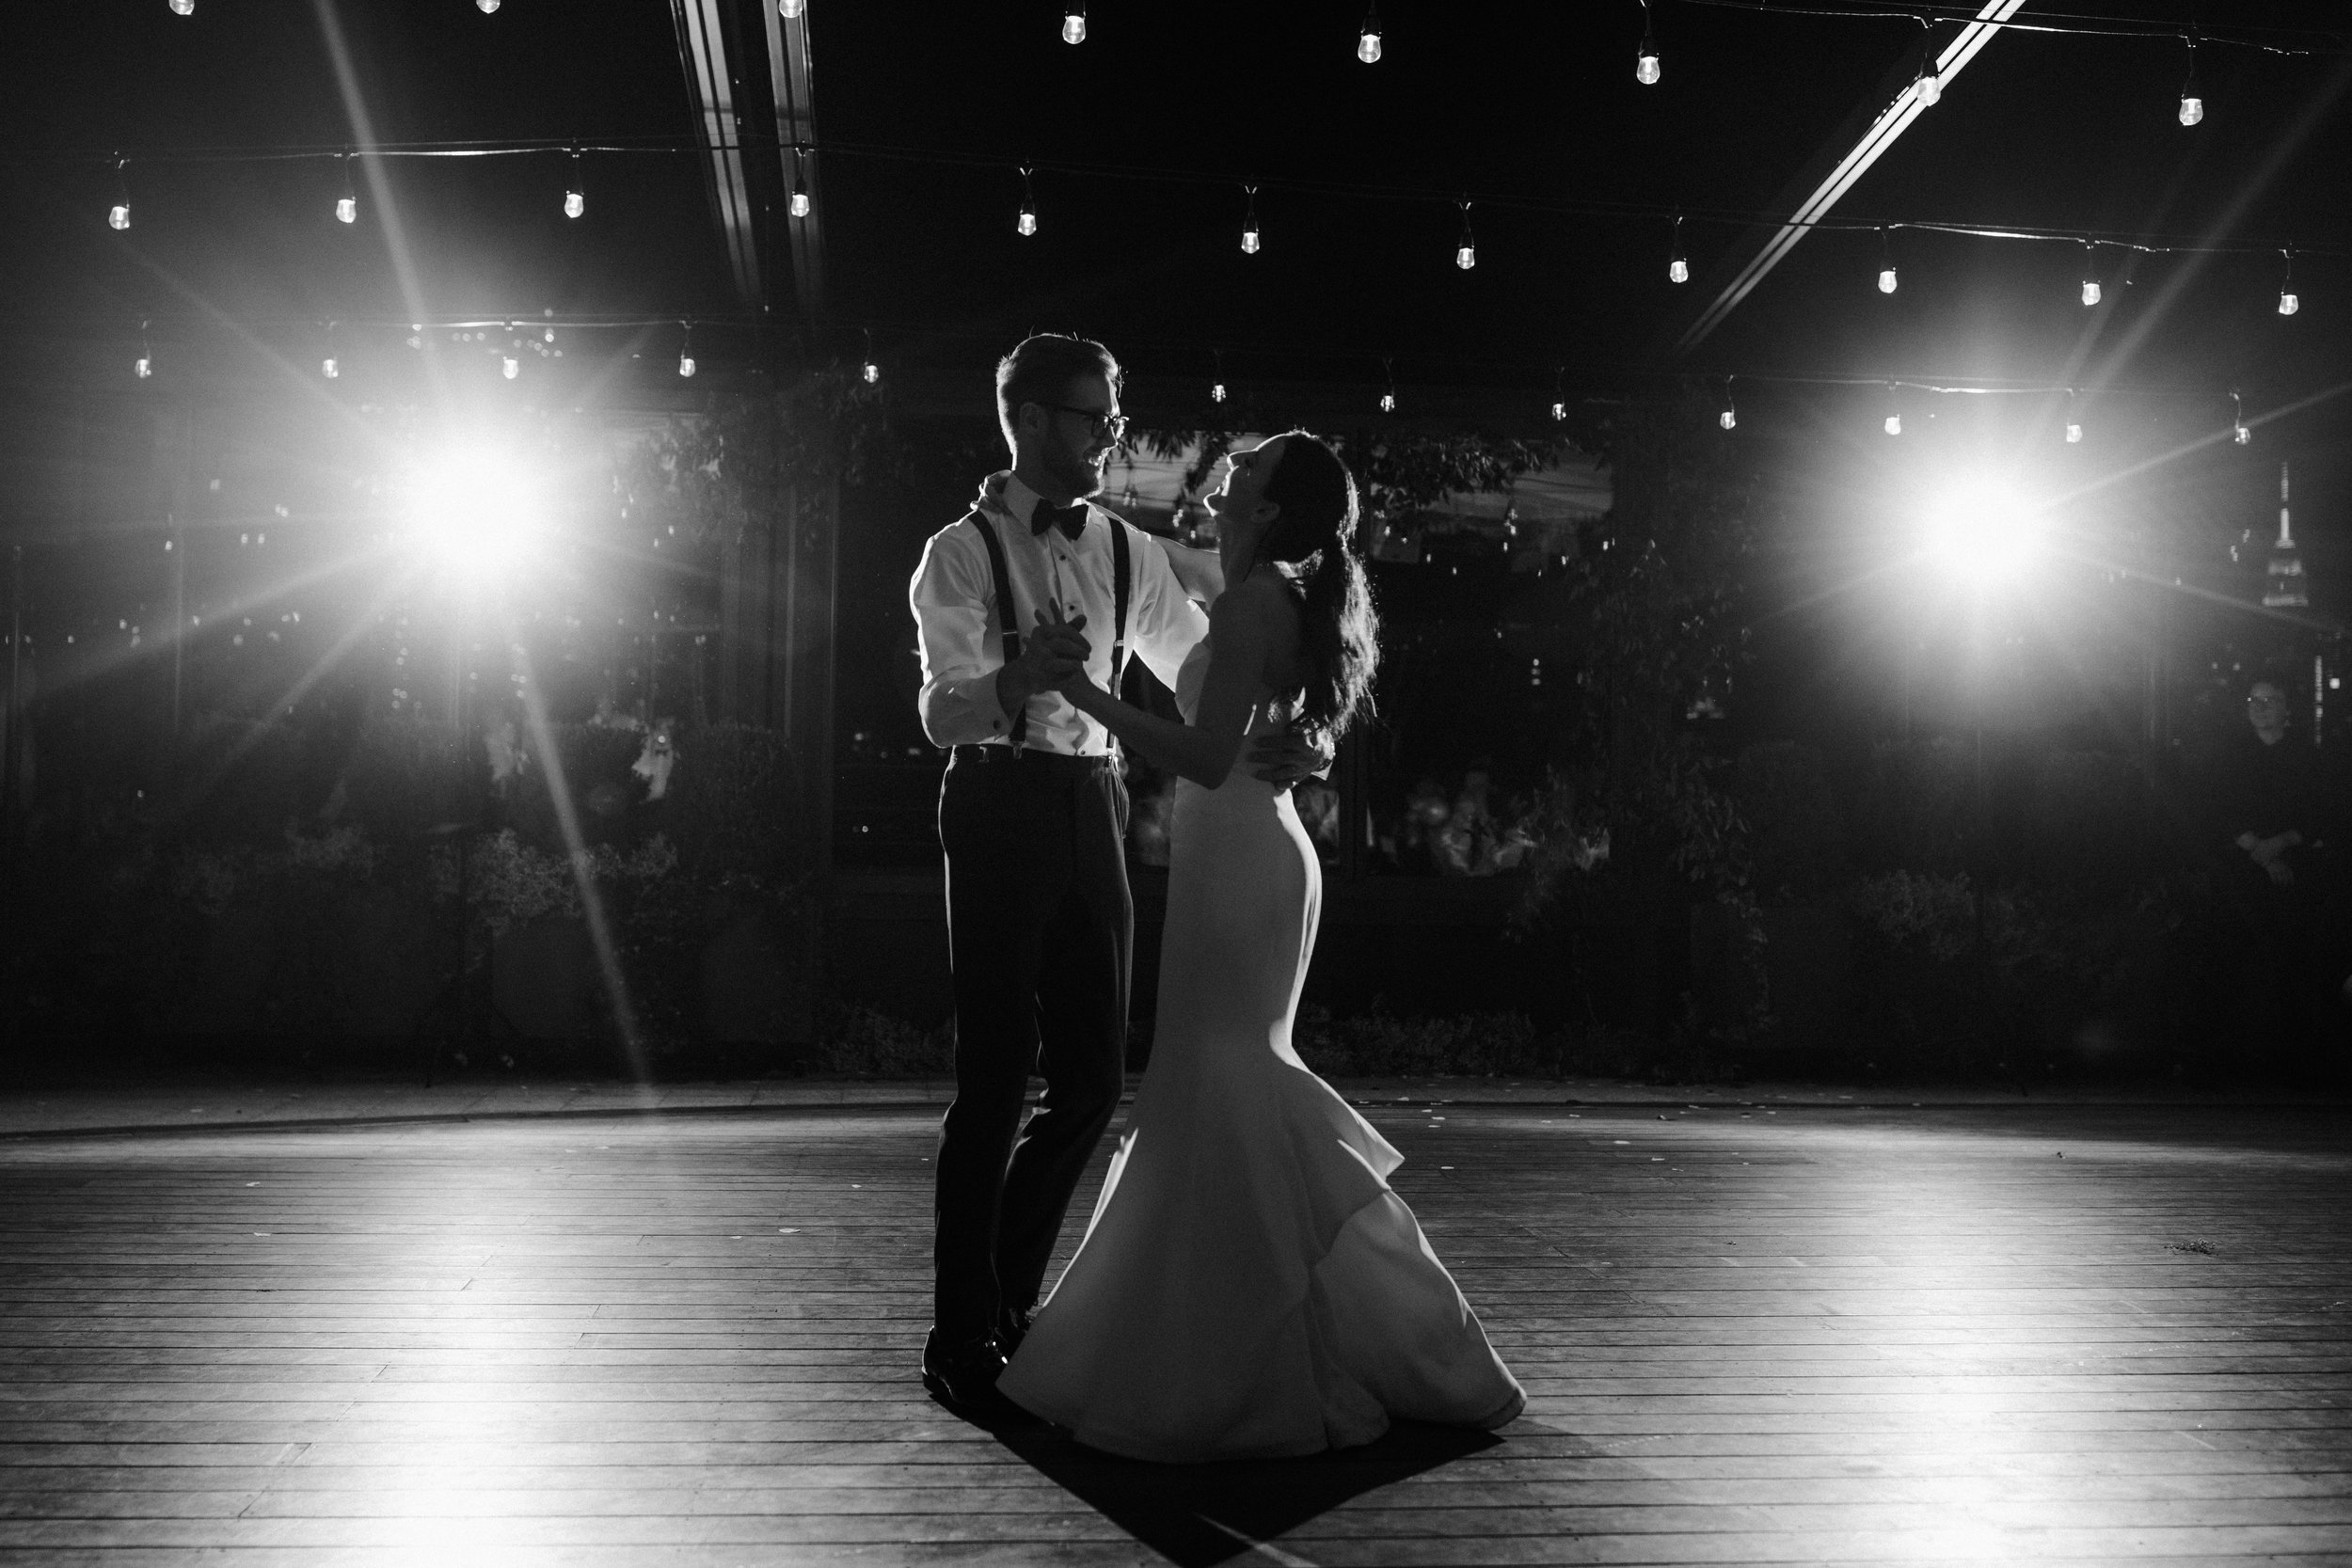 07062019-MARISA-MICHIAL-WEDDING-Eryc Perez de Tagle Photography-instagram stories-134.jpg